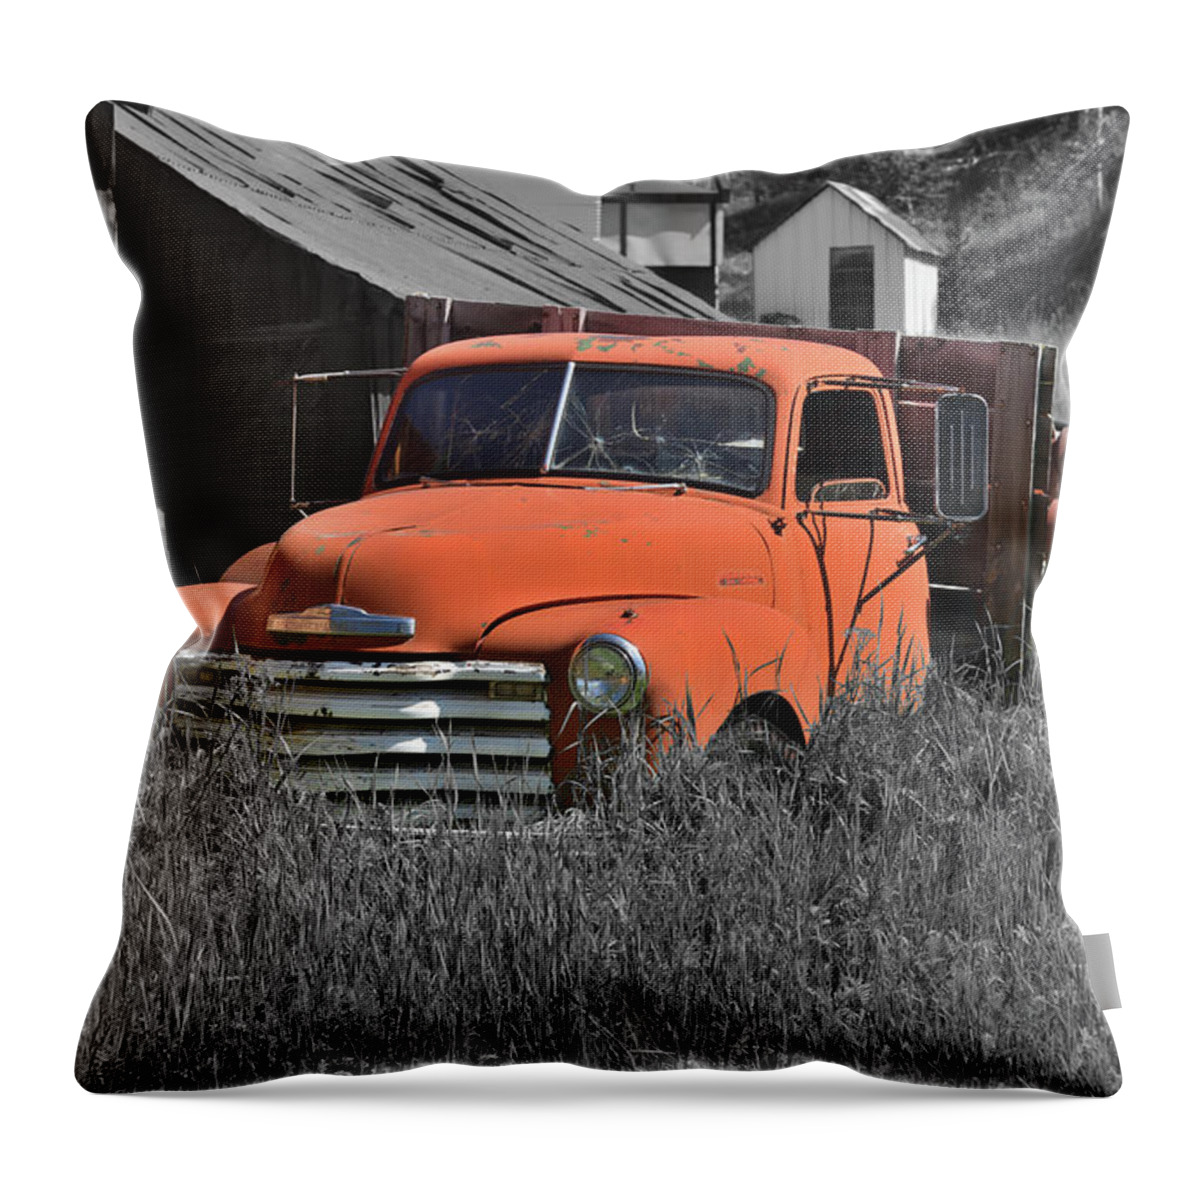 Truck Throw Pillow featuring the photograph Chevrolet At Rest by Richard J Cassato